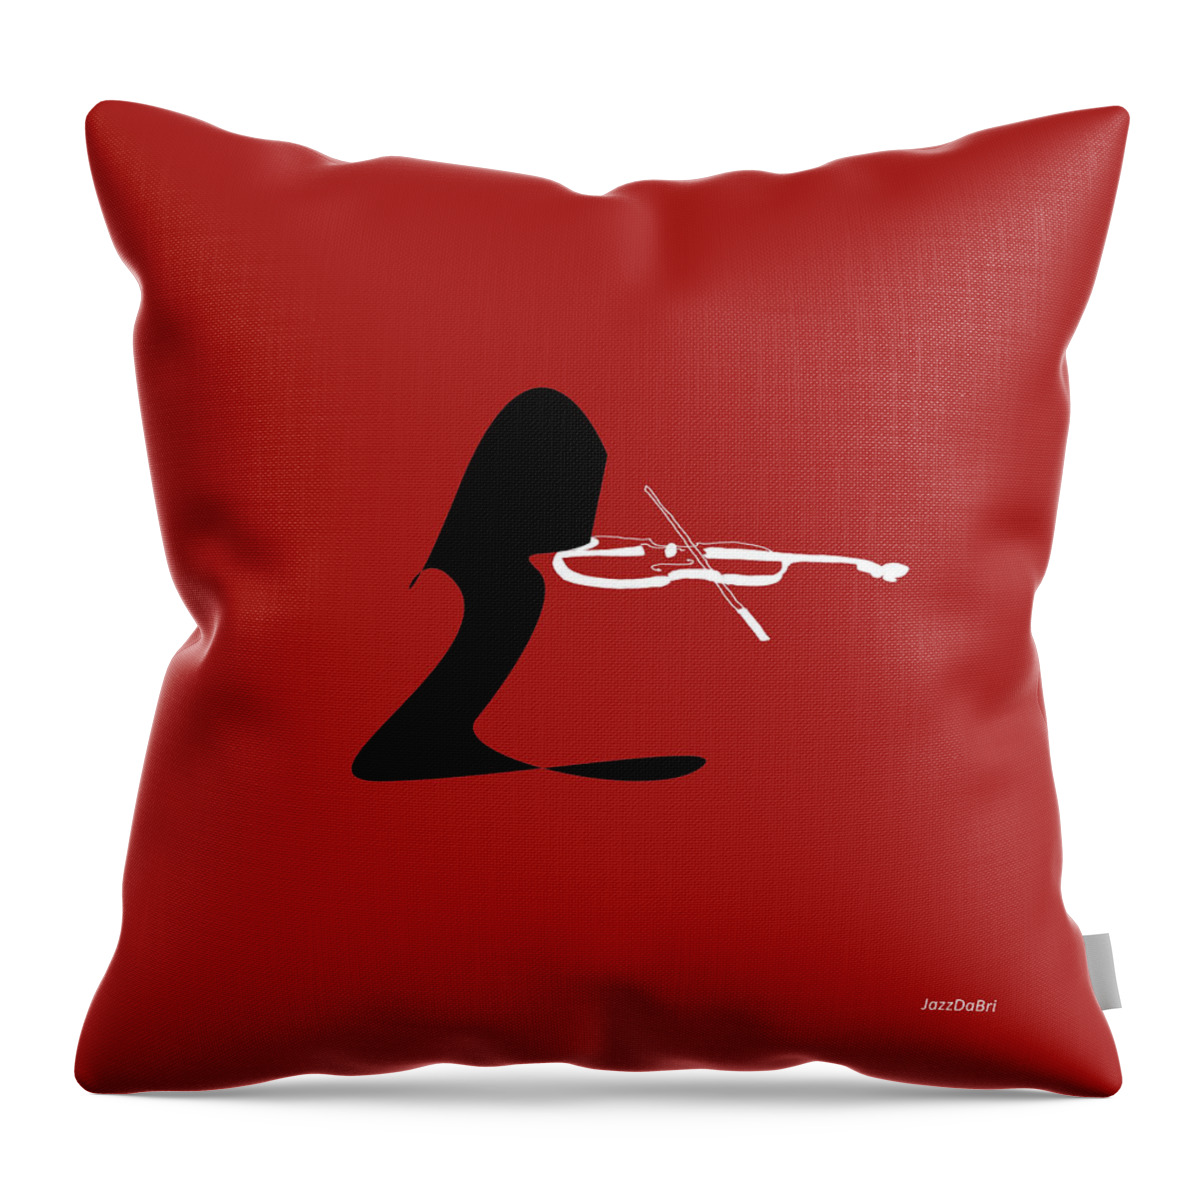 Jazzdabri Throw Pillow featuring the digital art Violin in Orange Red by David Bridburg